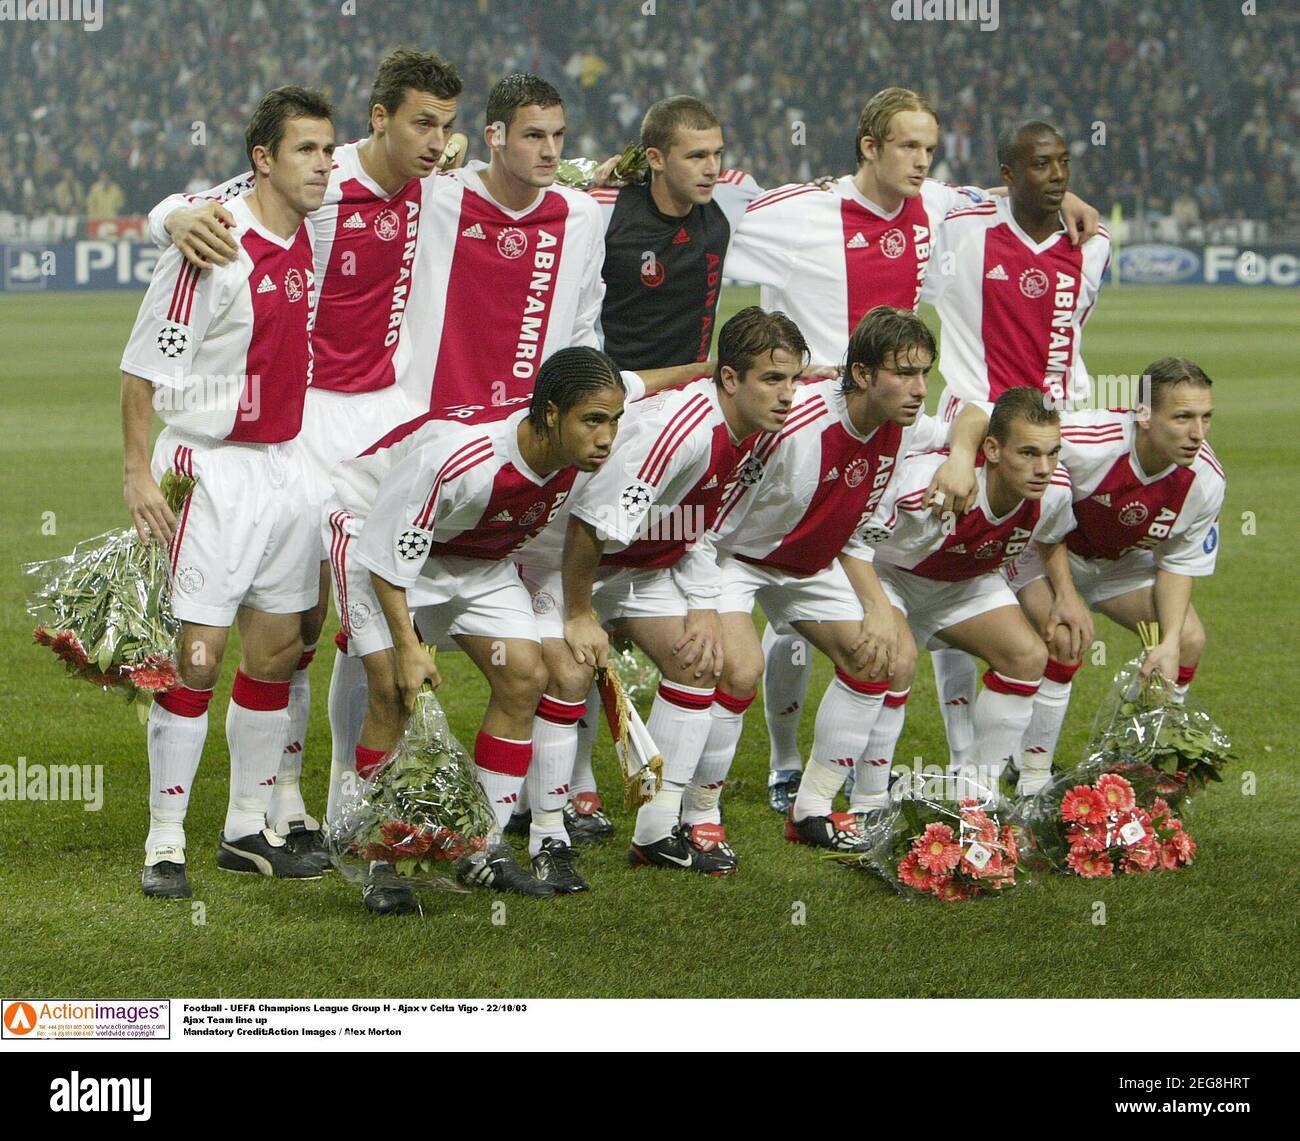 Football - UEFA Champions League Group H - Ajax v Celta Vigo - 22/10/03  Ajax Team line up Mandatory Credit:Action Images / Alex Morton Stock Photo  - Alamy